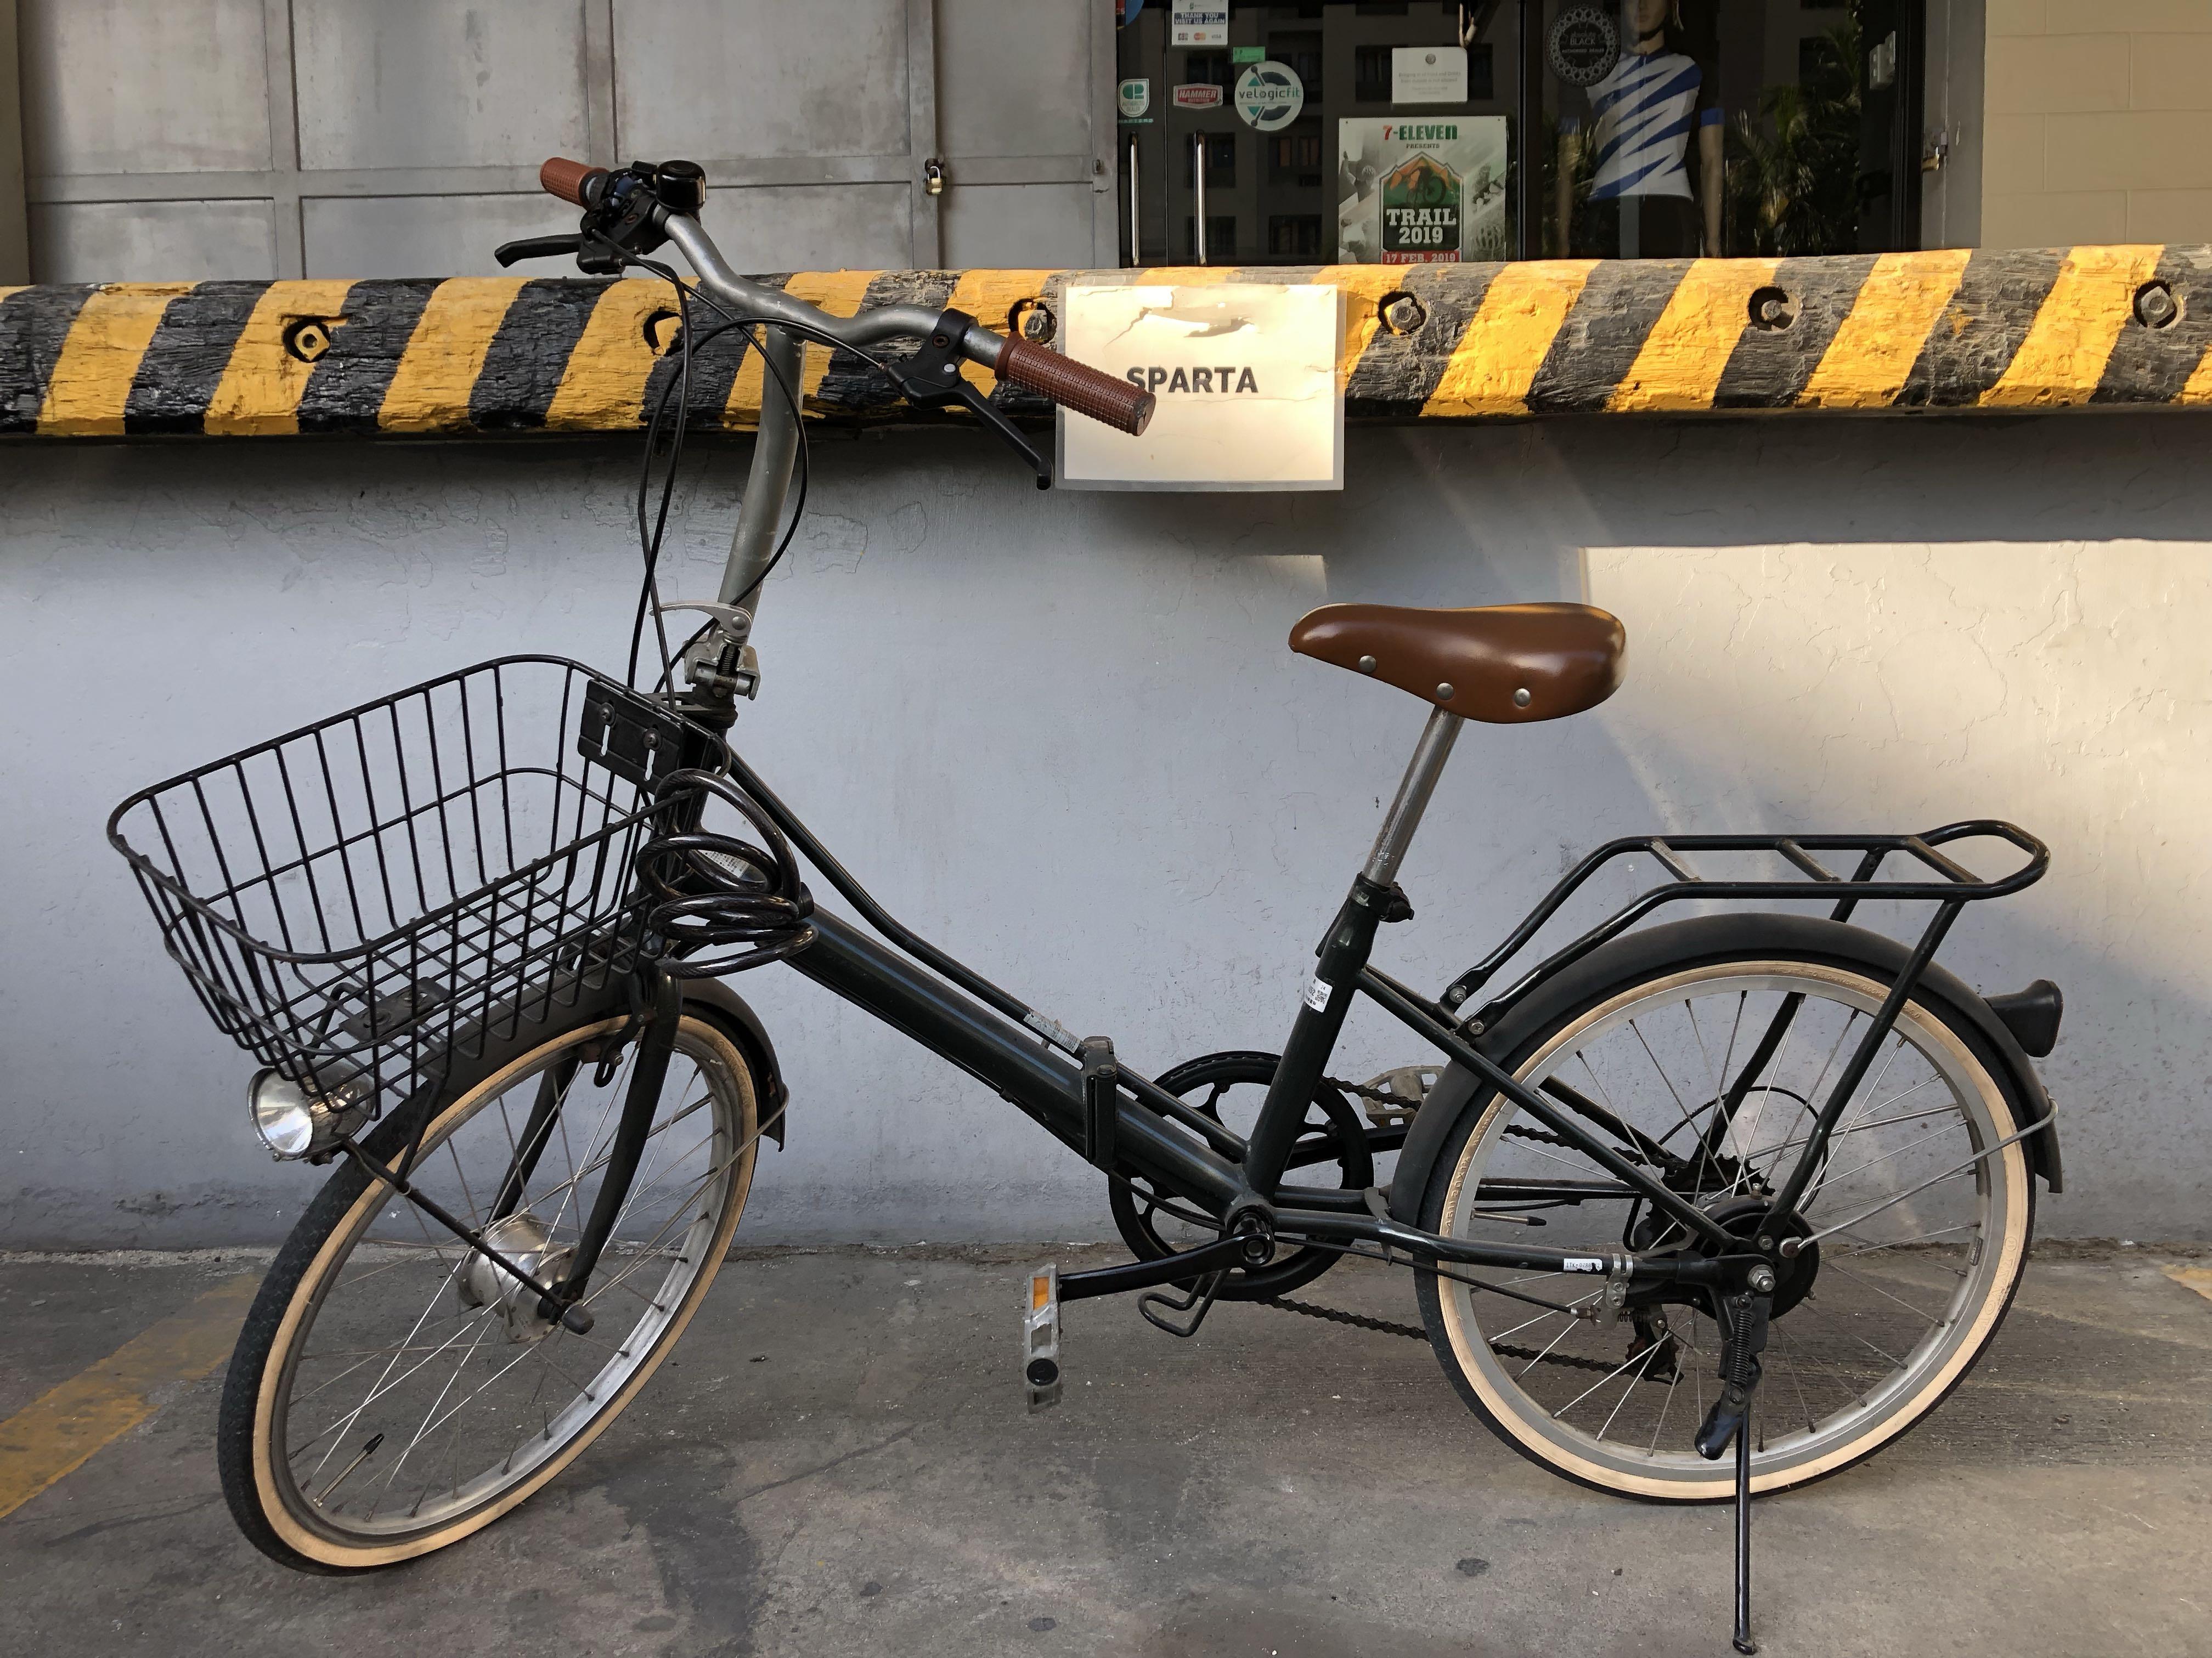 japanese bike with basket